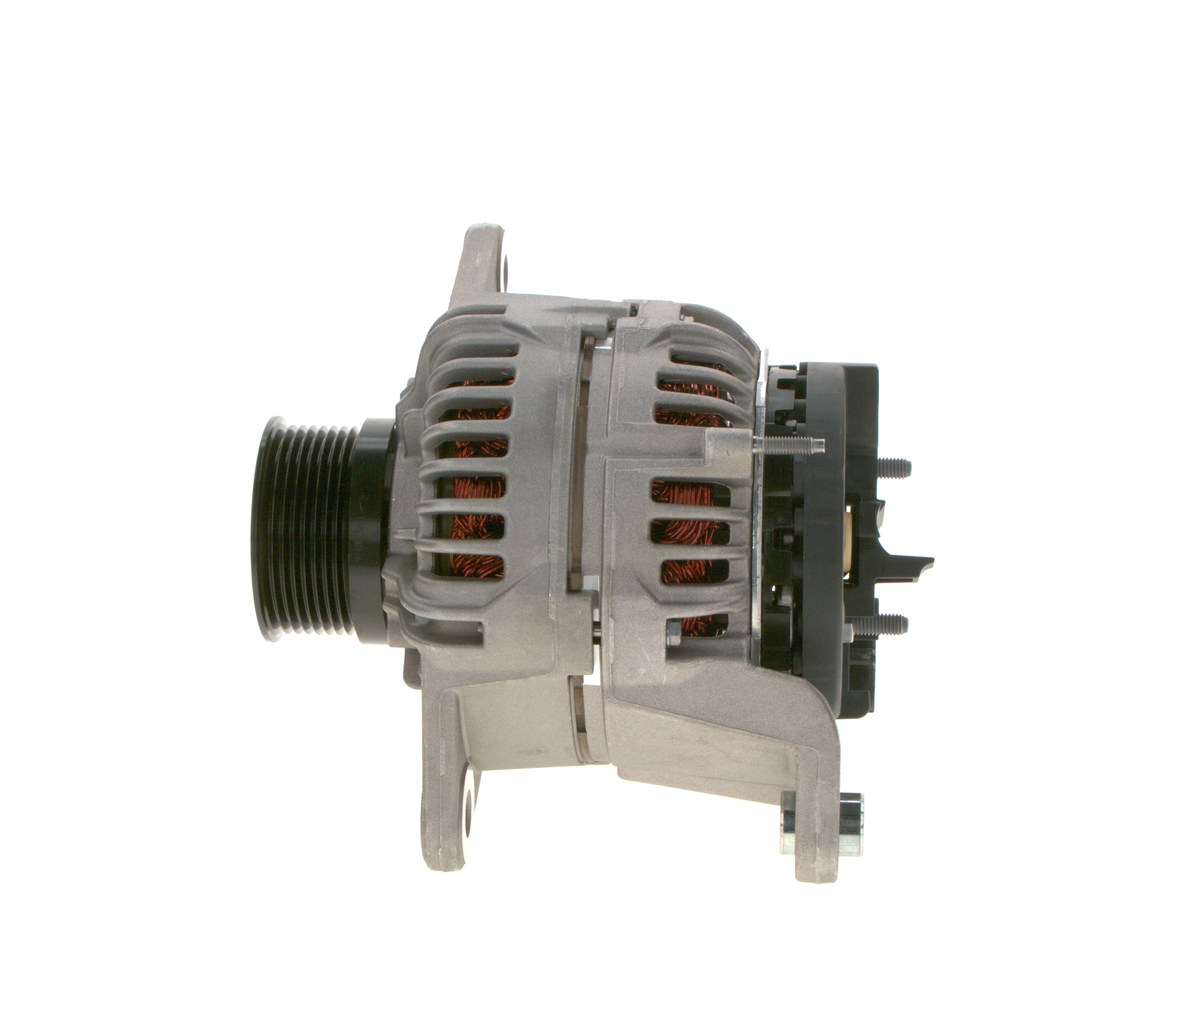 HD10LPB (>) 28V 30/150 BOSCH 28V, 150A, excl. vacuum pump, Ø 73 mm Generator 0 124 655 437 buy